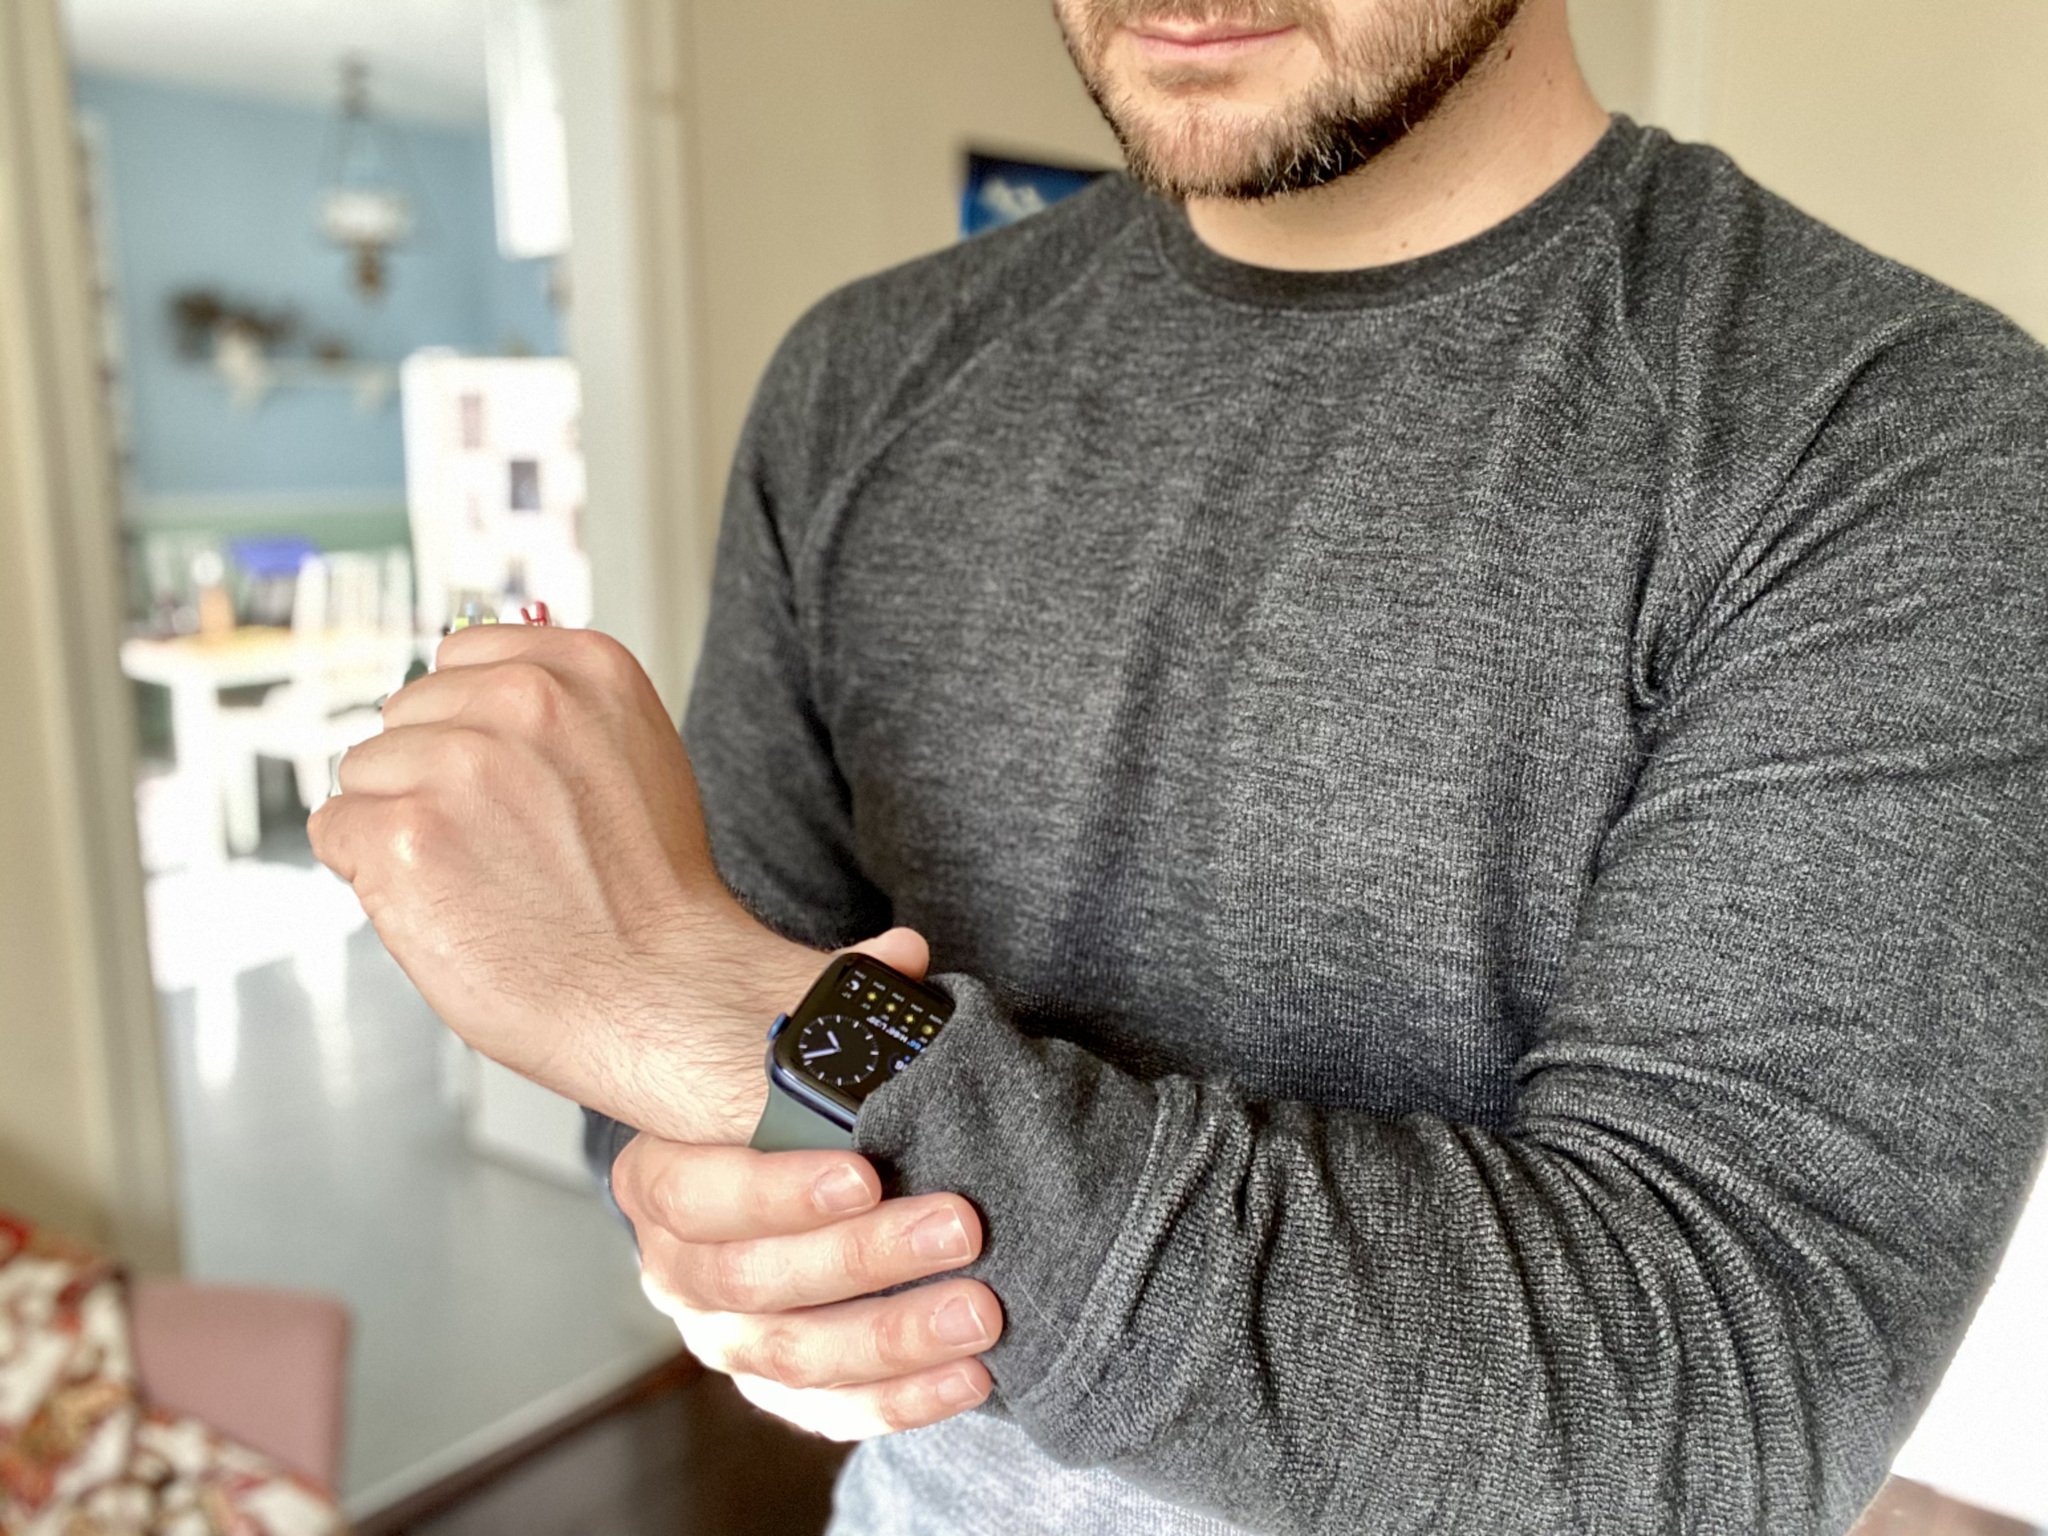 Watch watches как правильно часы. Apple watch. Apple watch Series 7. Apple watch синие. Apple watch на руке.